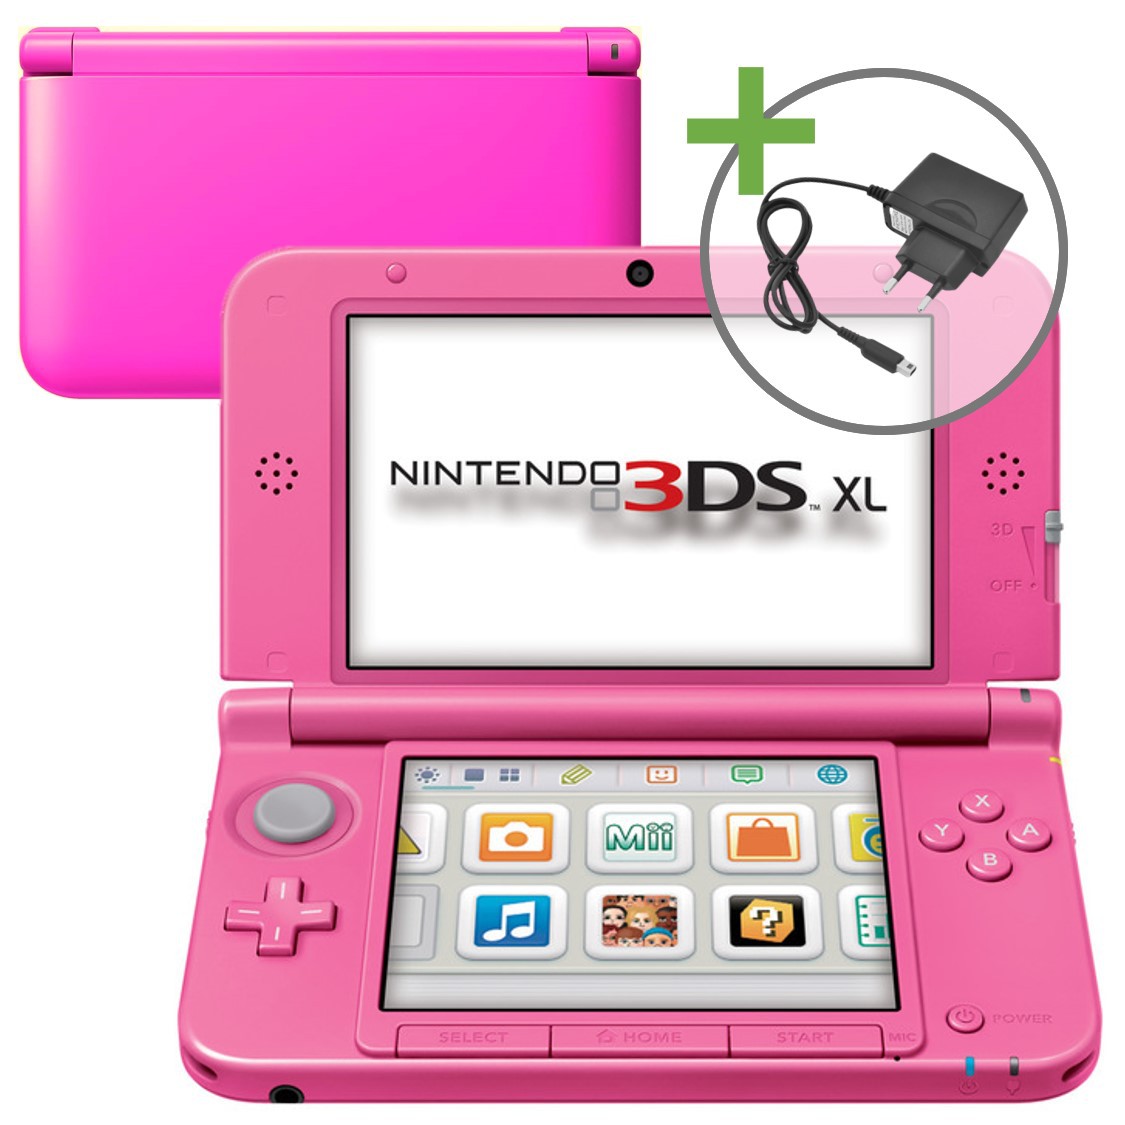 Nintendo 3DS XL - Pink - Nintendo 3DS Hardware